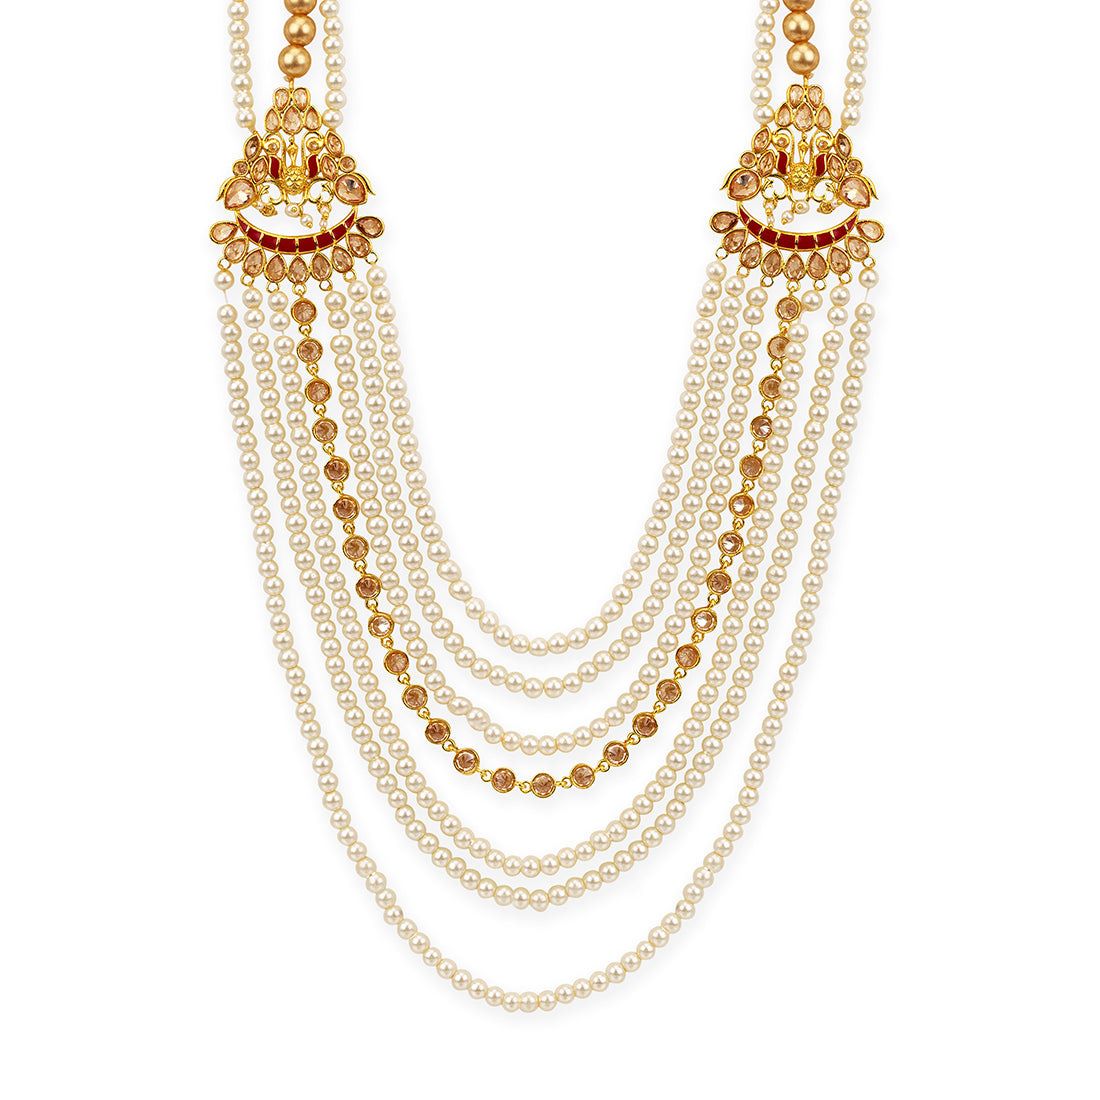 Apsara Groom Multilayered Pearl Necklace